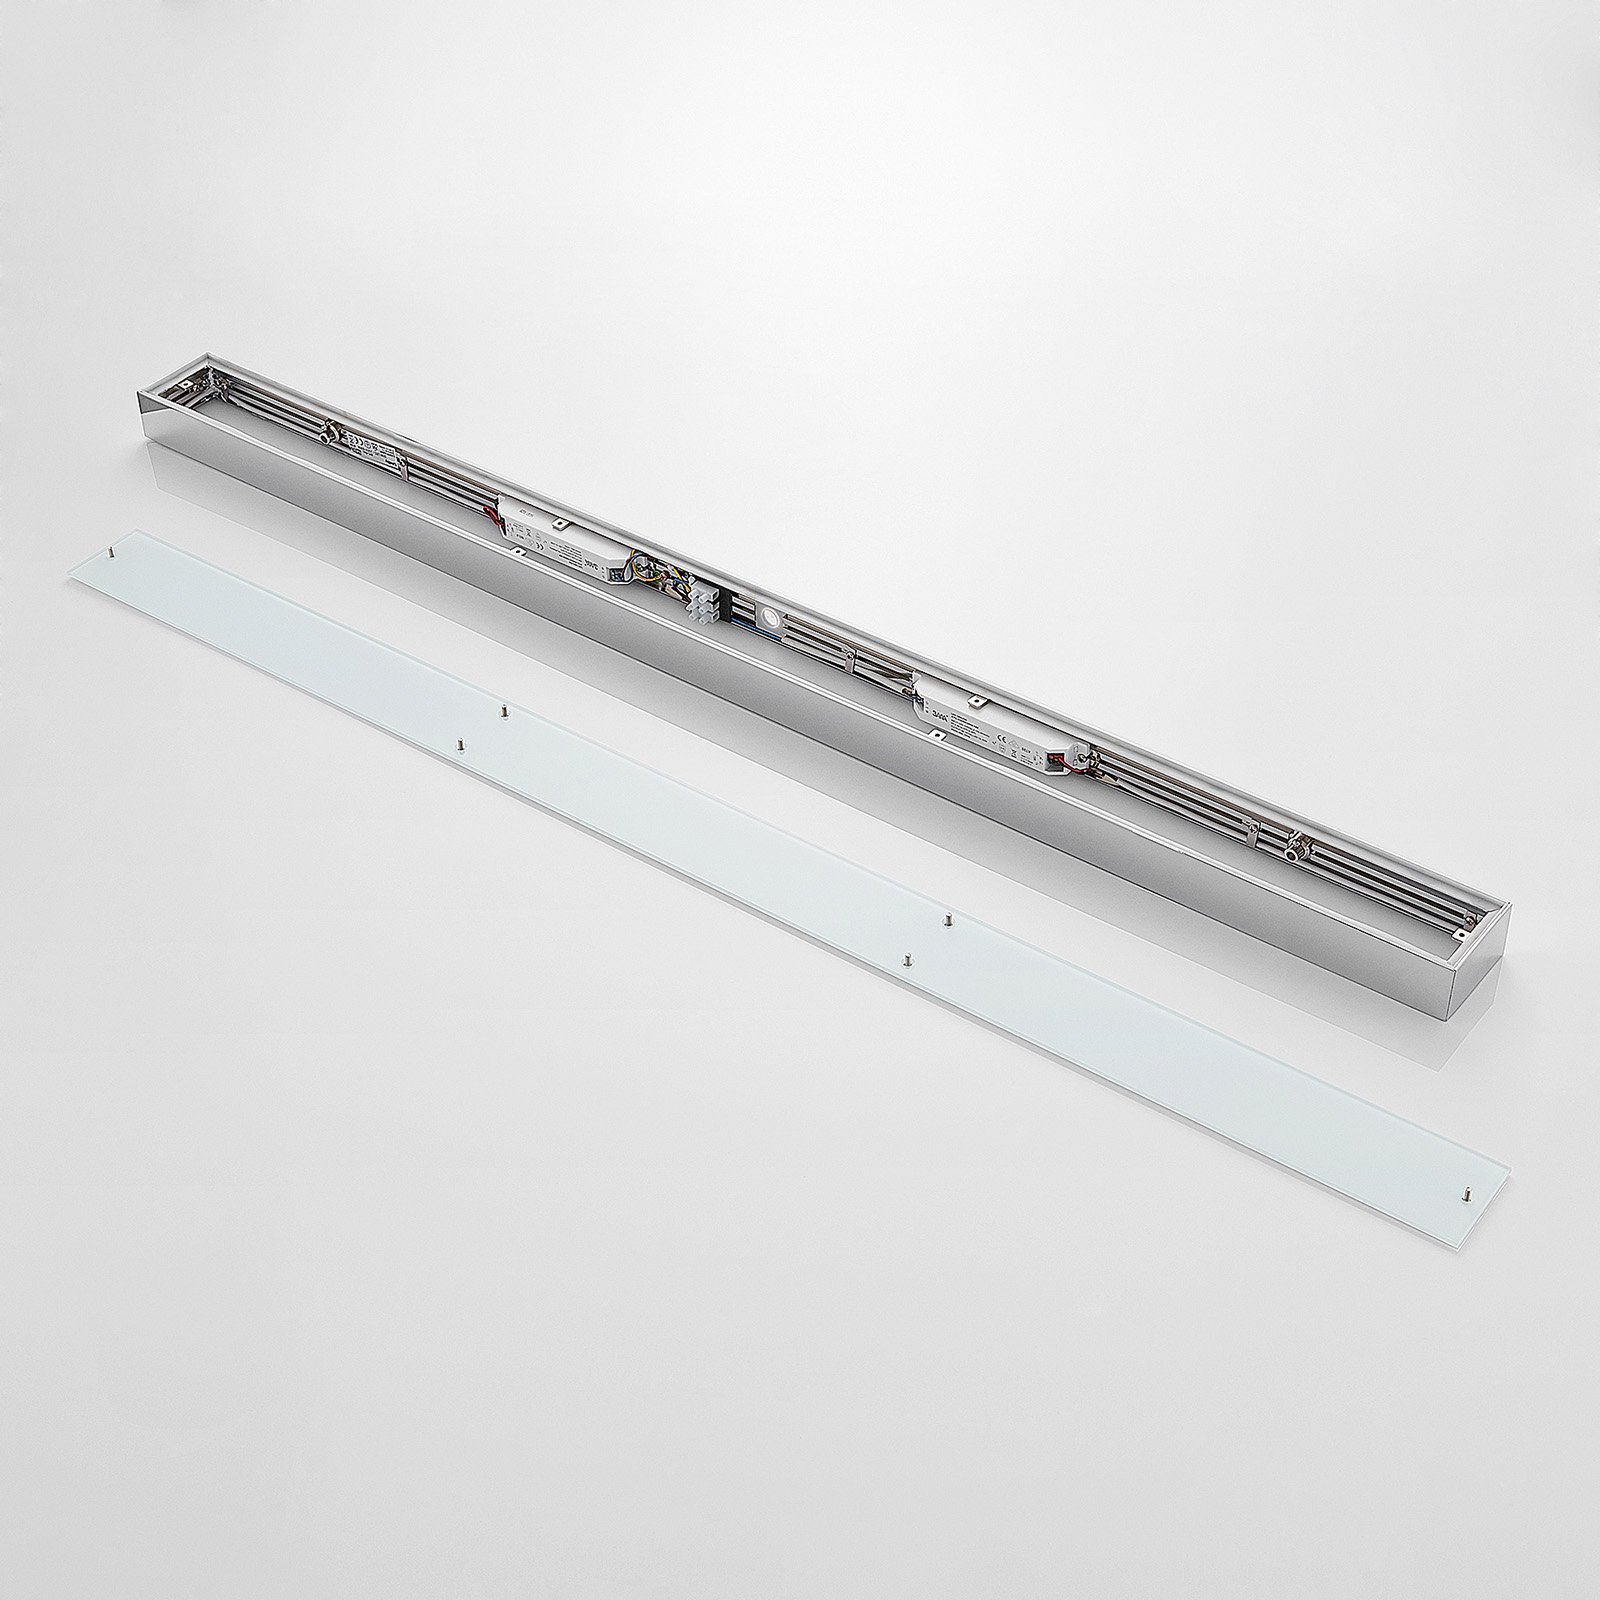 Lindby Layan aplique LED para baño, cromo, 120 cm